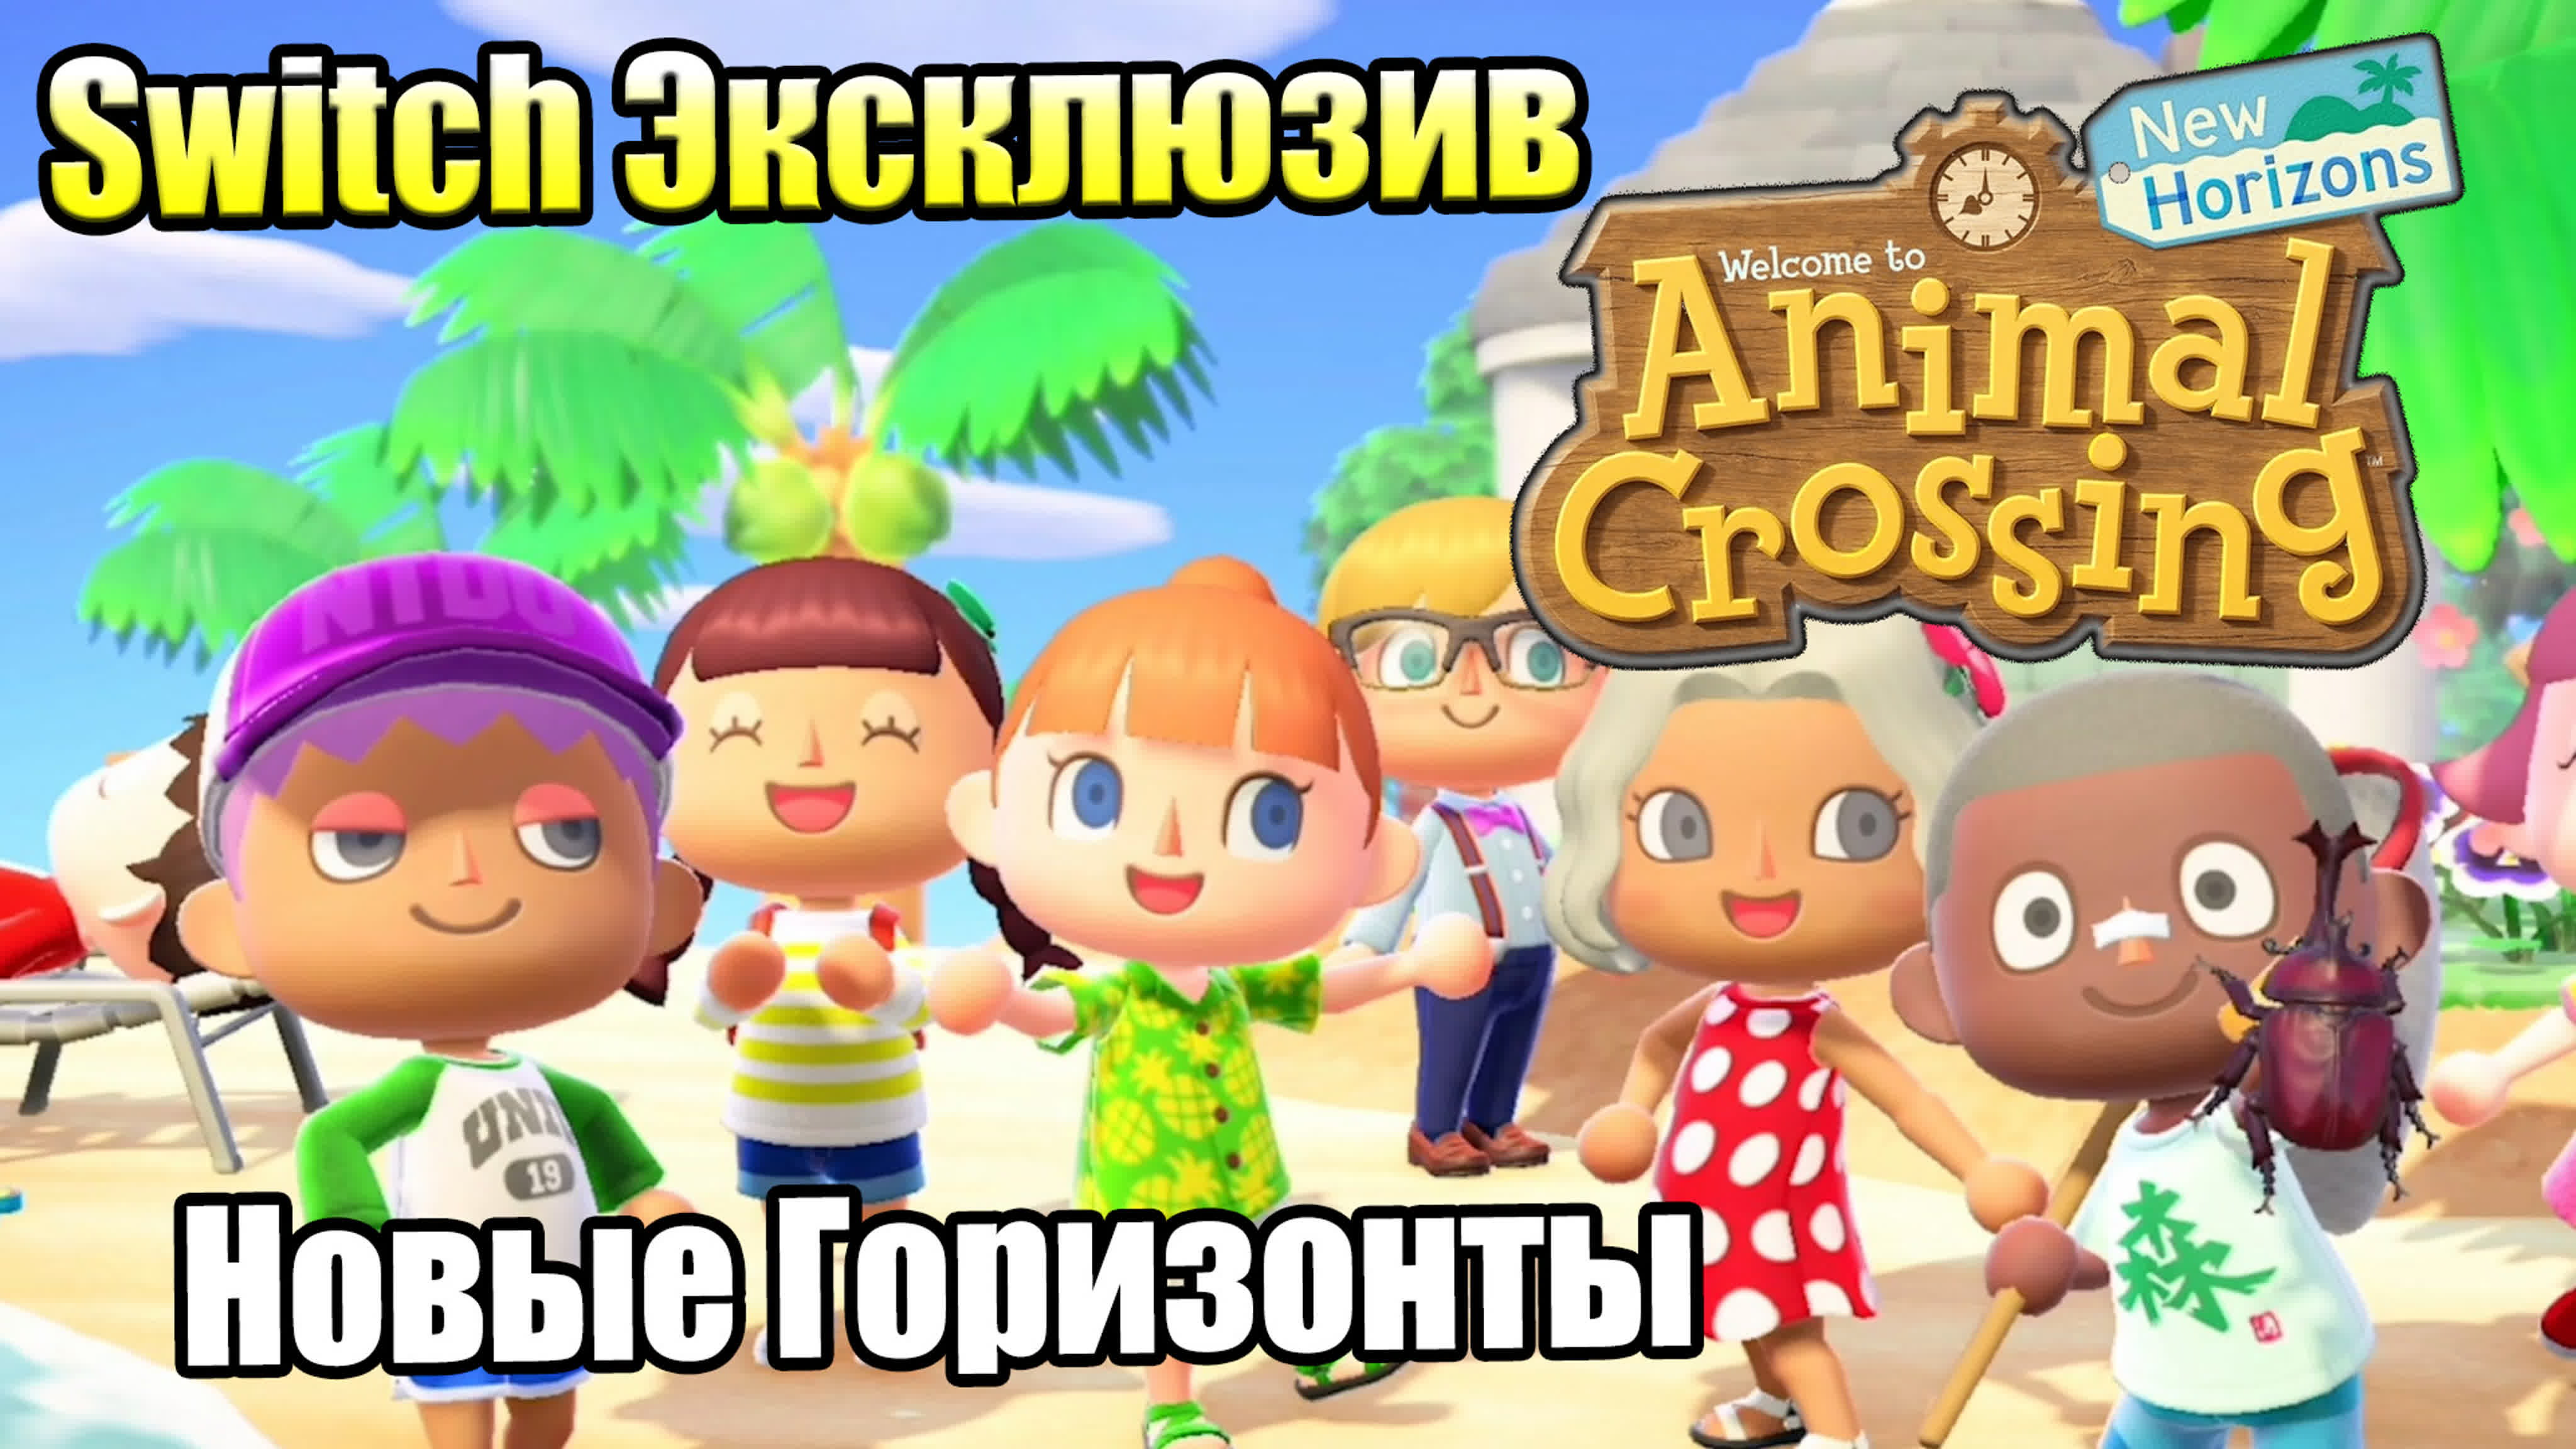 Animal Crossing New Horizons (Switch)